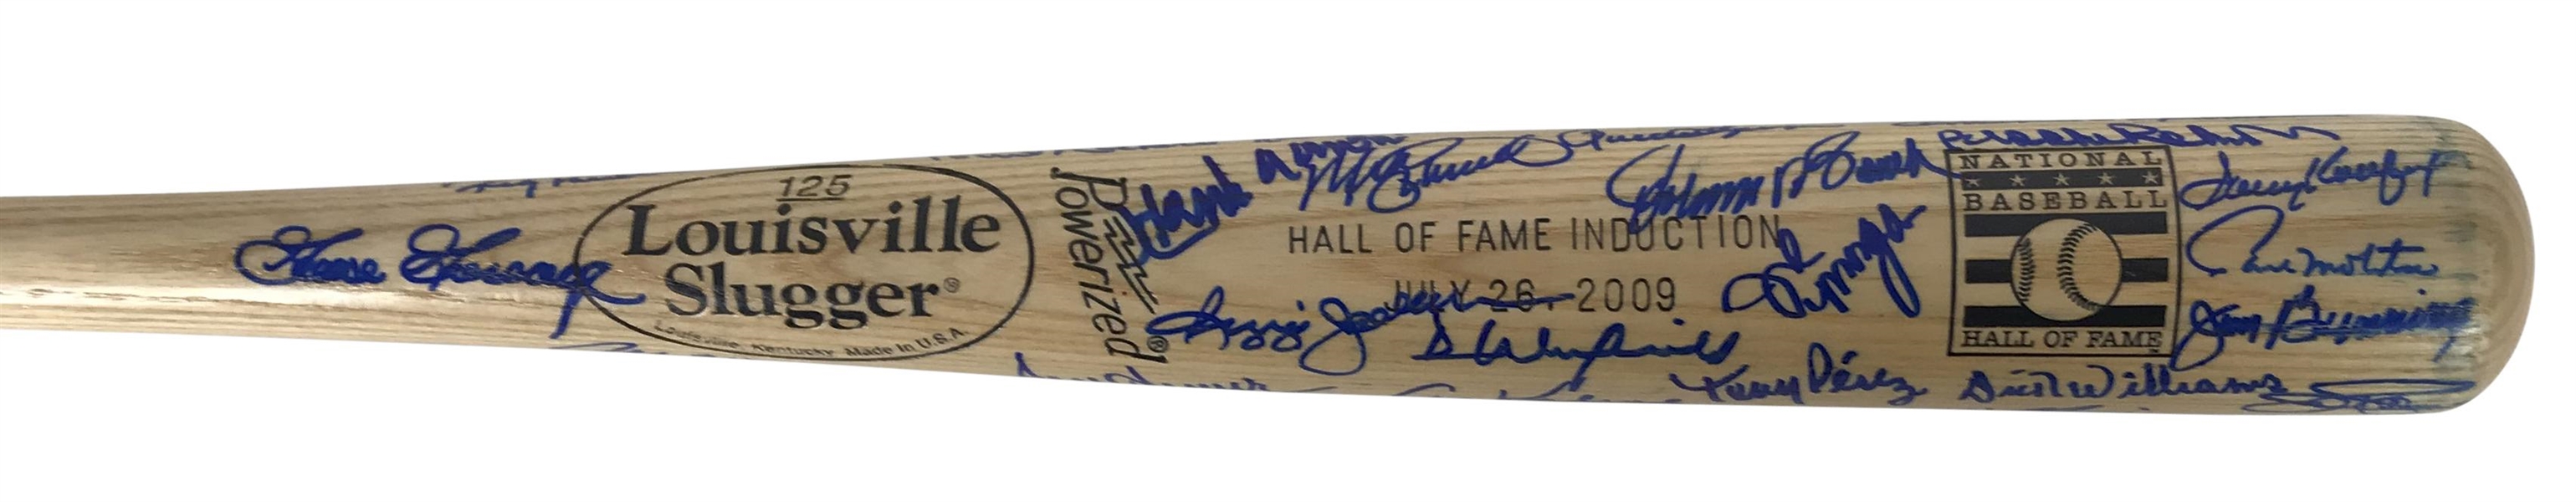 2009 Hall of Fame Induction Day Multi-Signed Baseball Bat w/ Koufax, Aaron, Jackson & Others! (40+ Autographs)(Beckett/BAS Guaranteed)